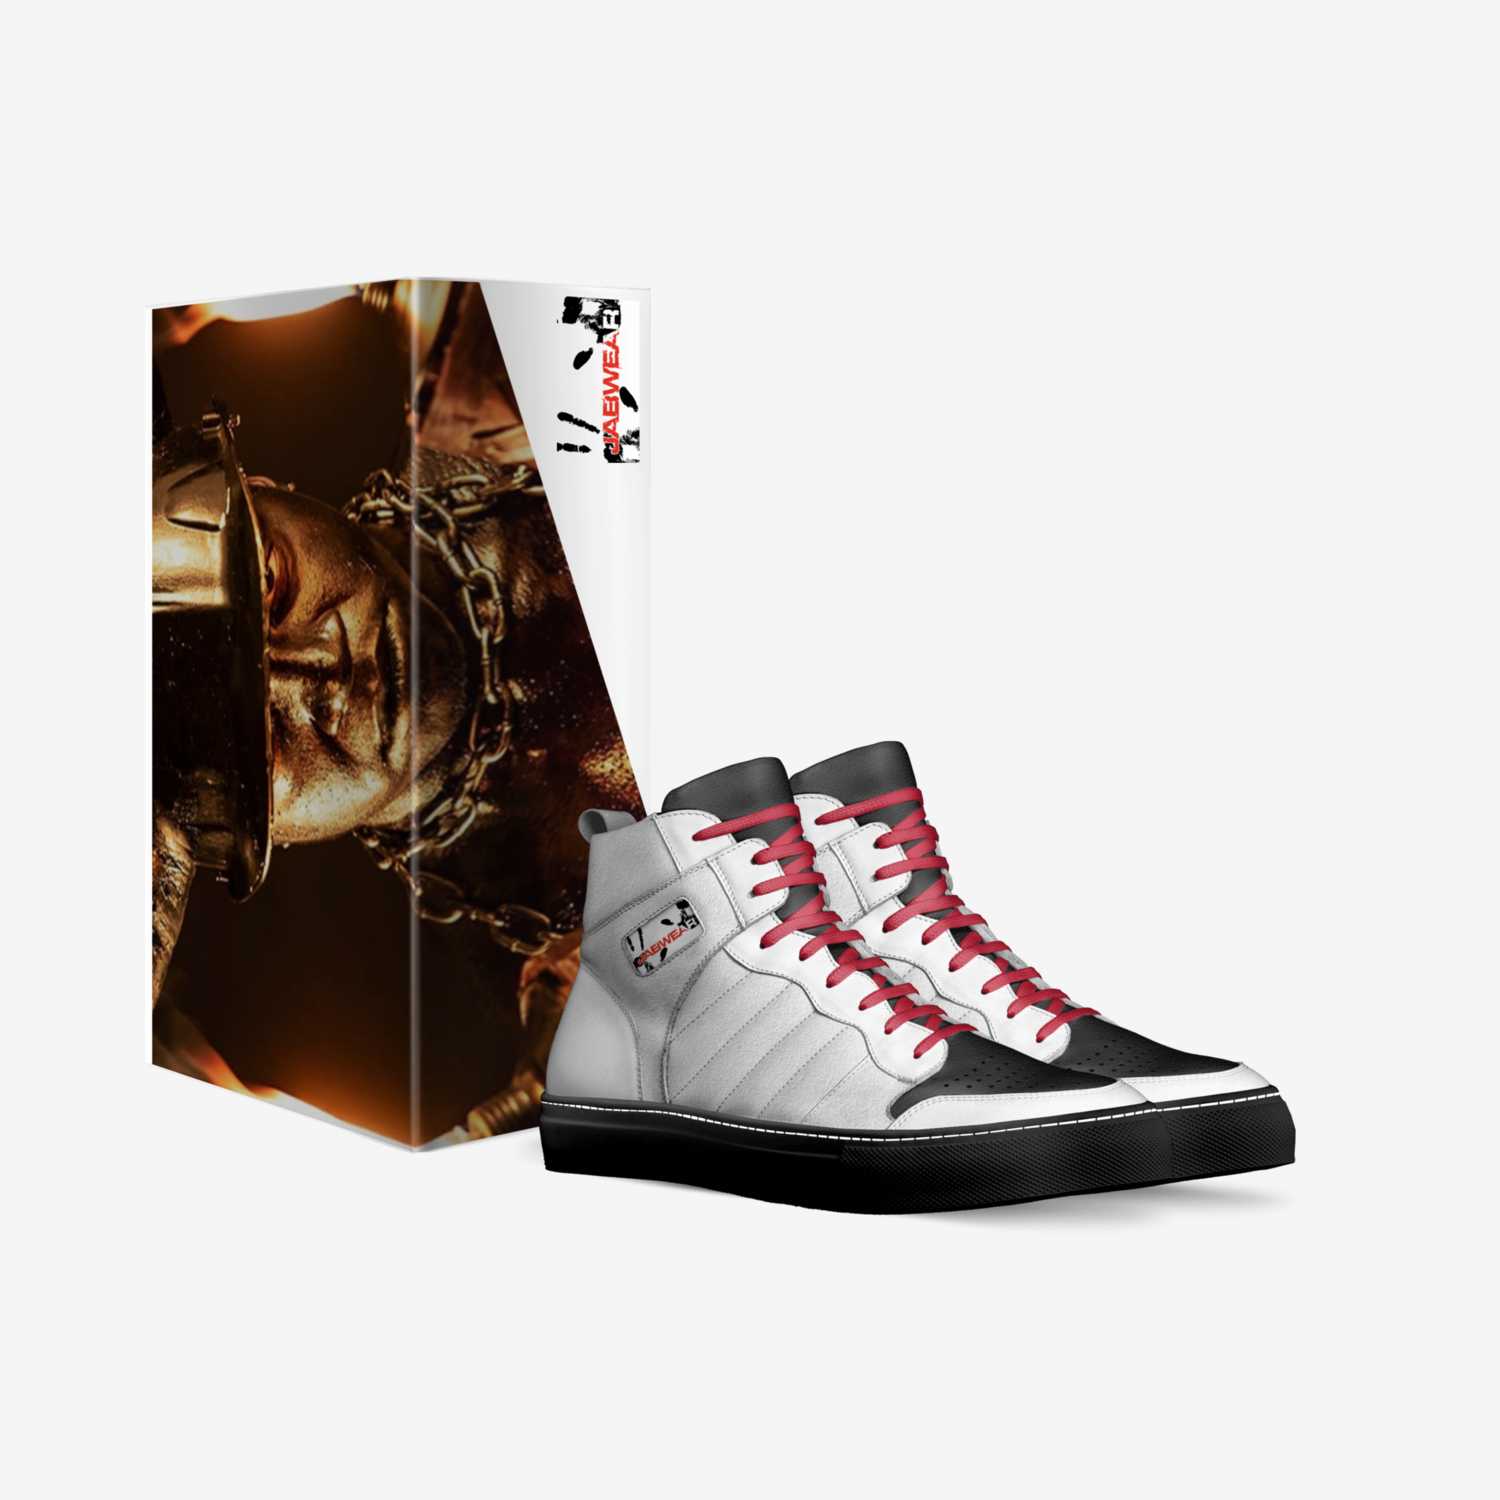 Jabwear  custom made in Italy shoes by Kadhafi Nimrod | Box view